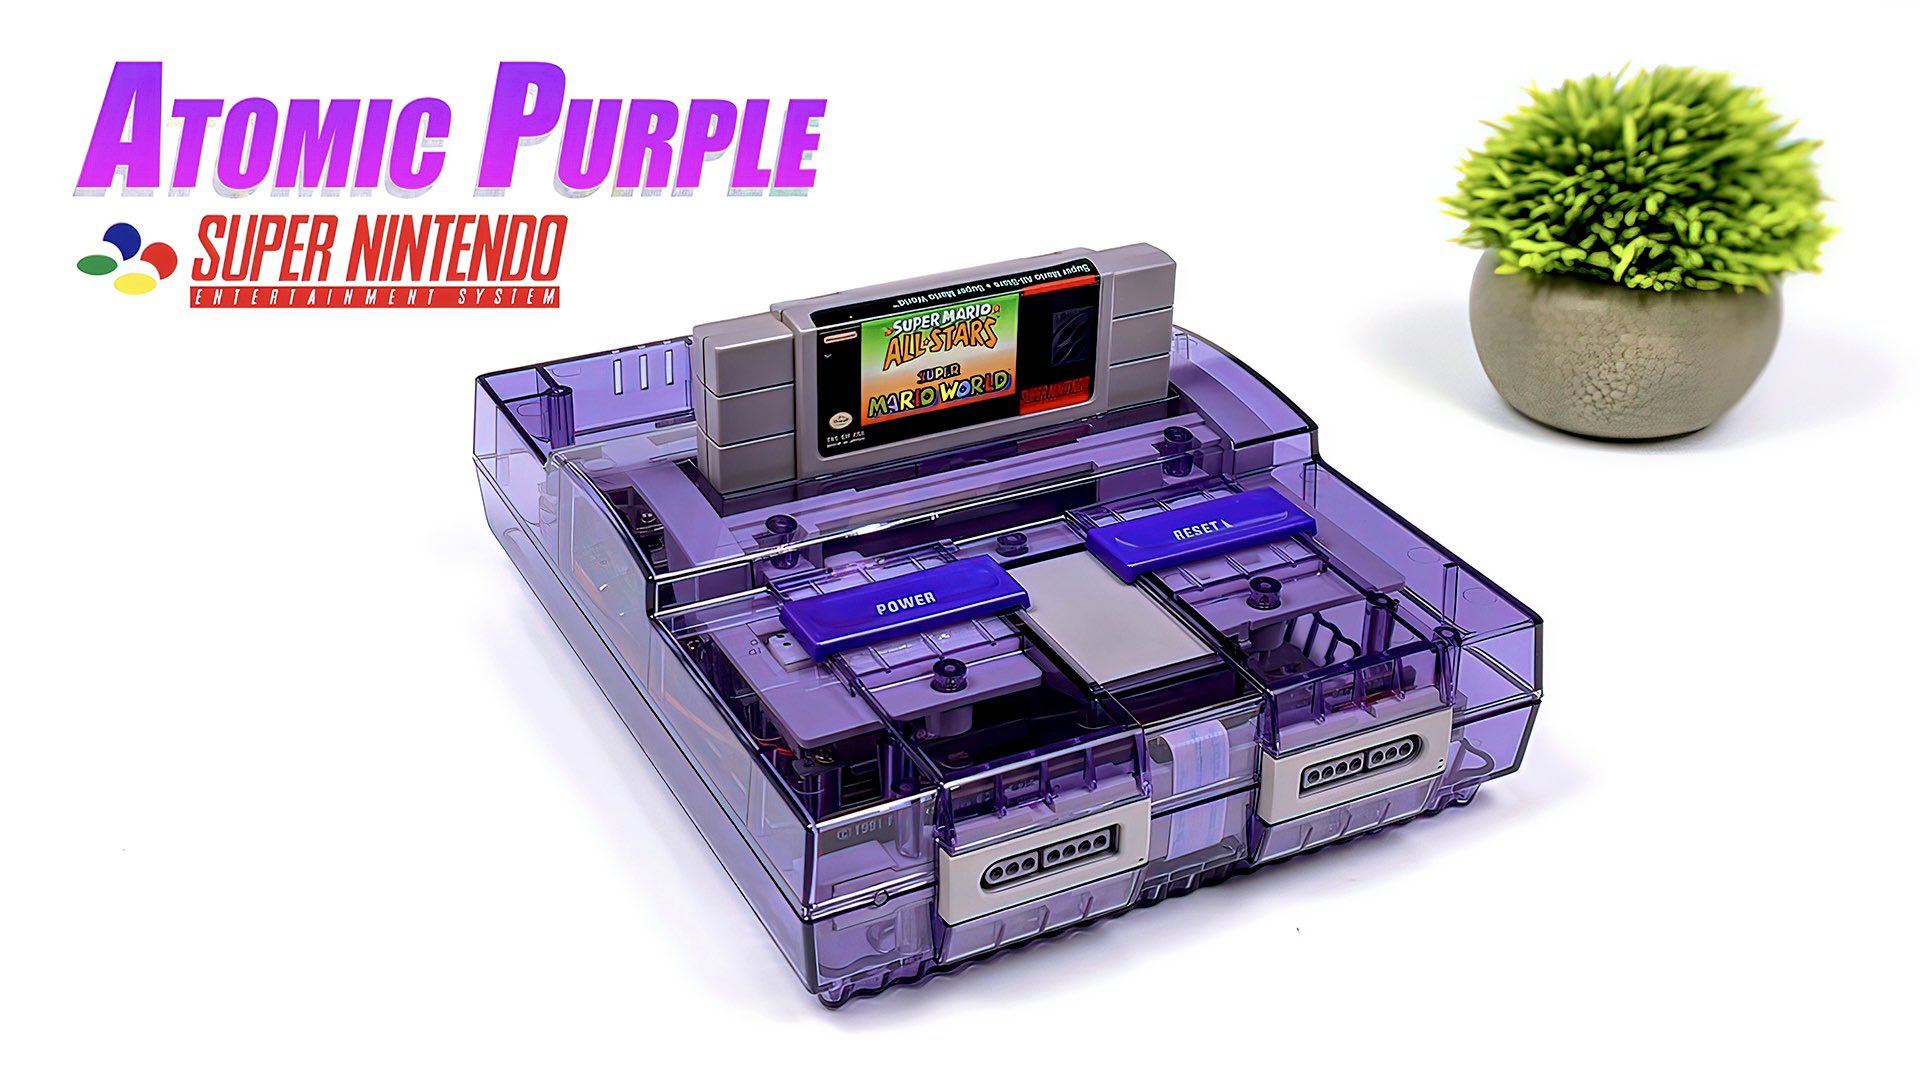 Etaprime on X: These New Atomic Purple Super Nintendo Shells Are